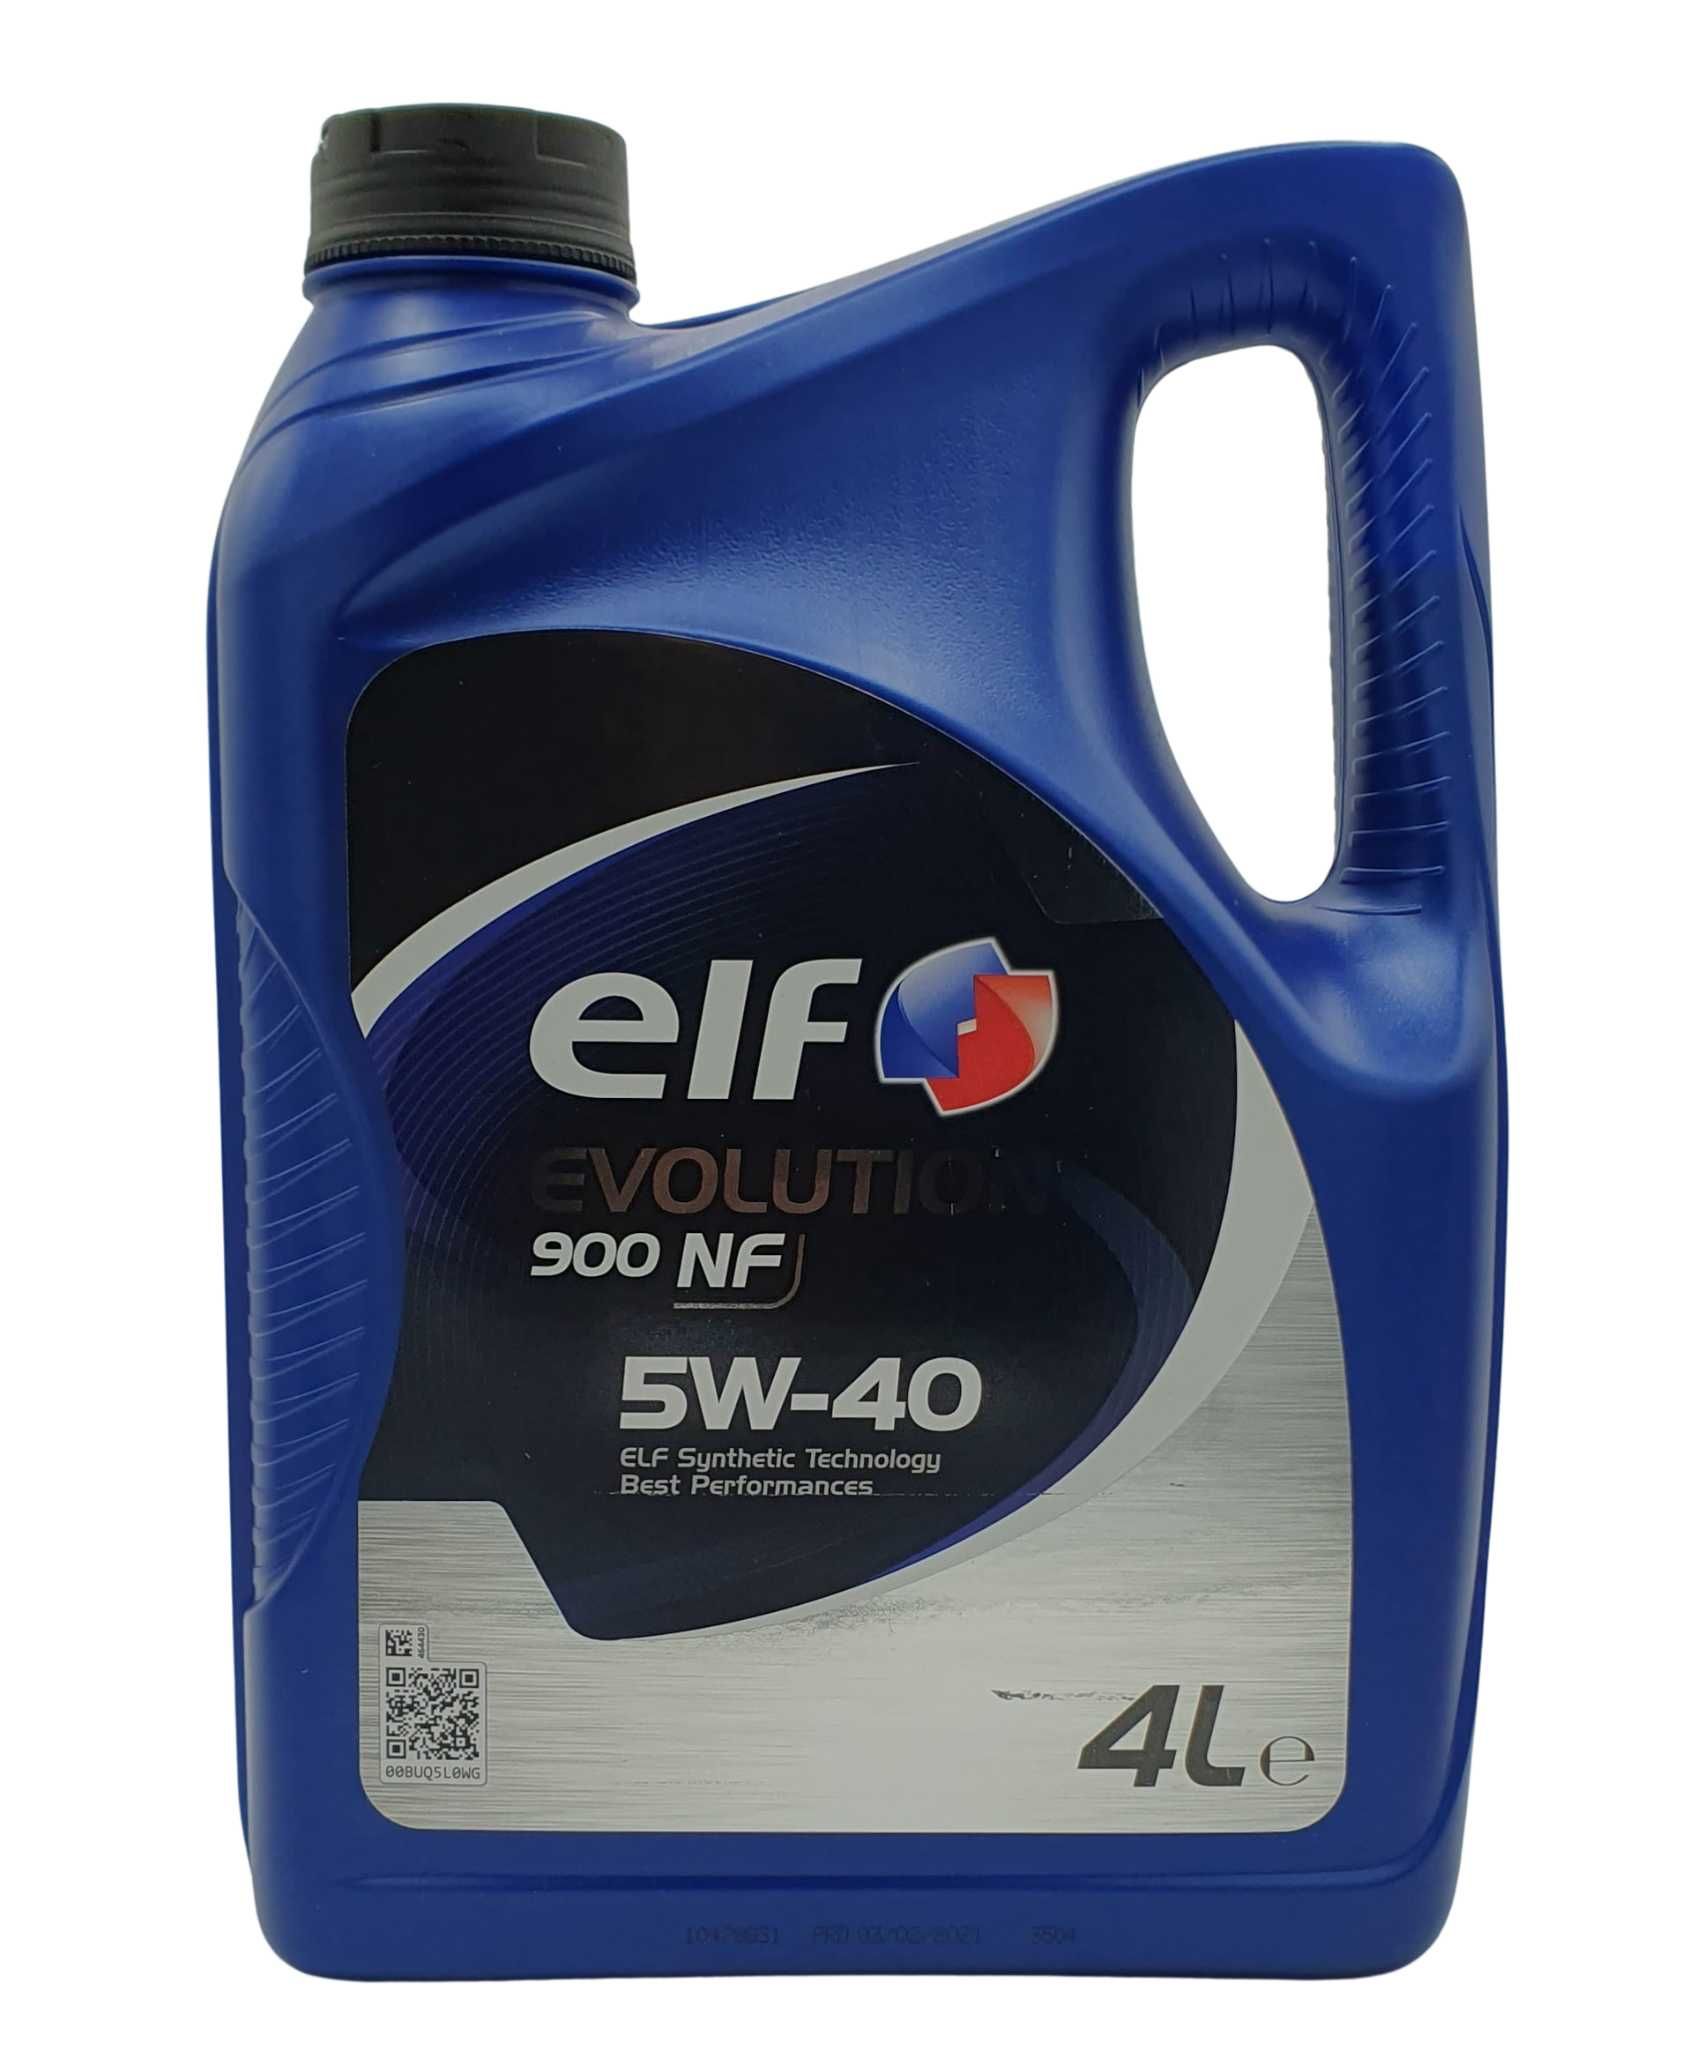 Elf Evolution 900 NF 5W-40 4 Liter